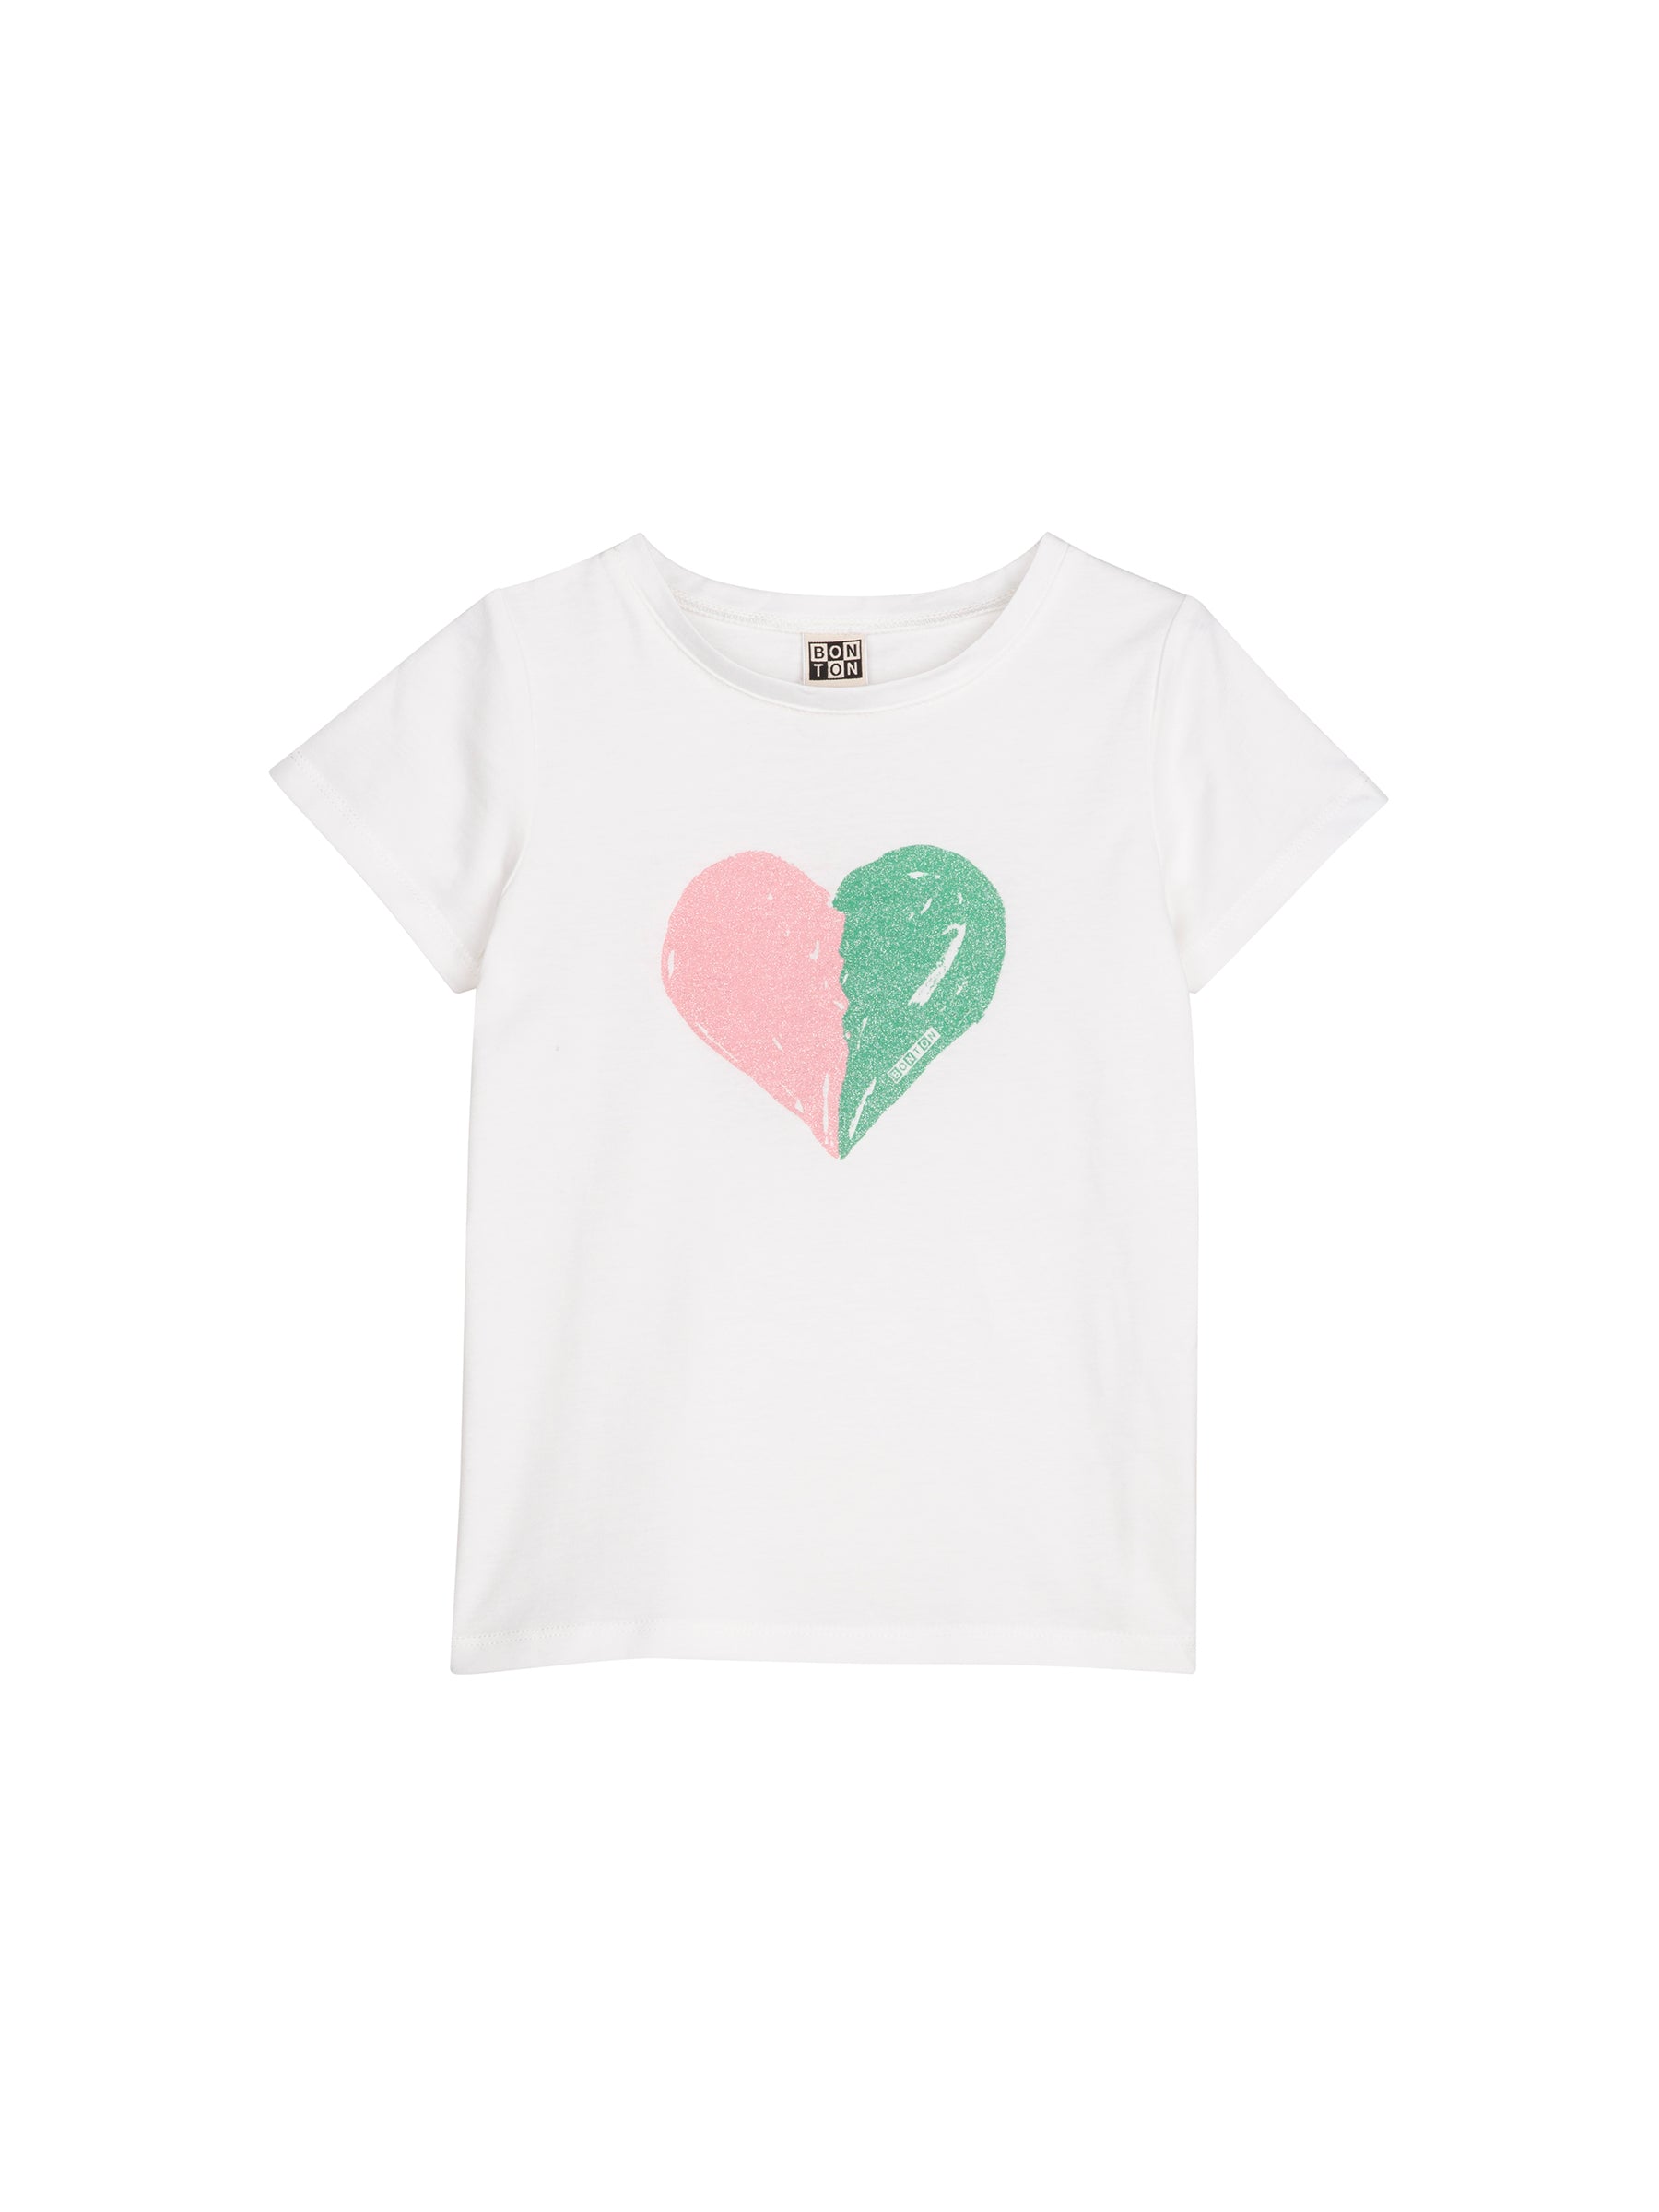 Girls White Heart Cotton T-Shirt